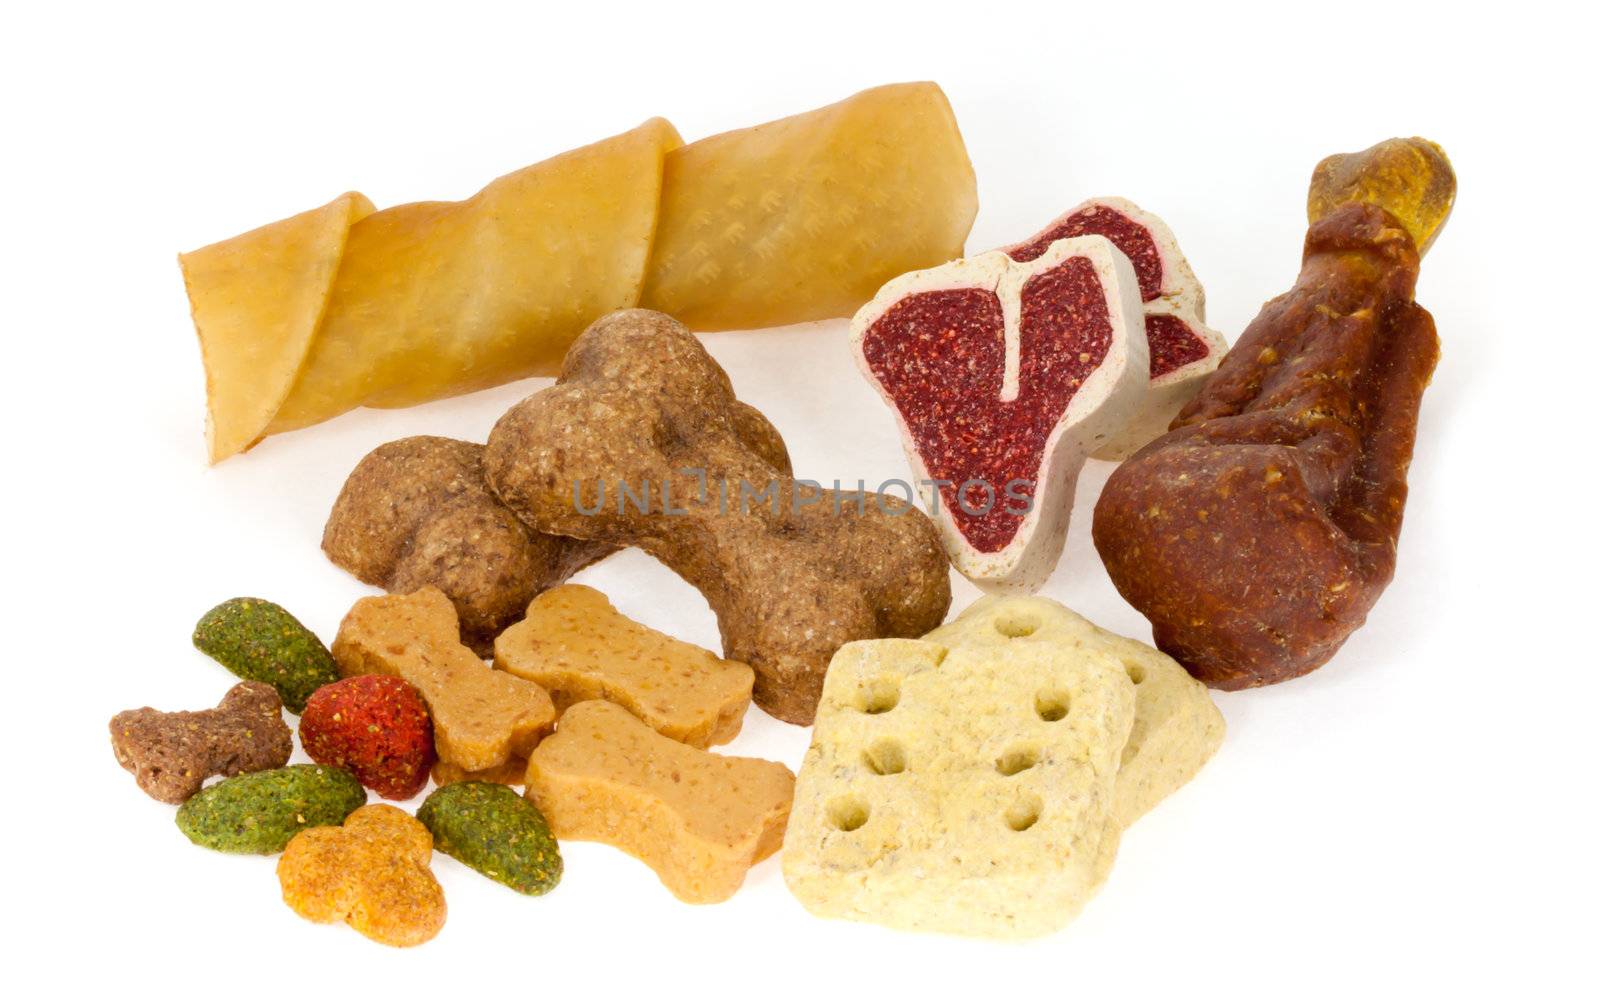 Assortment of dog treats by melpomene